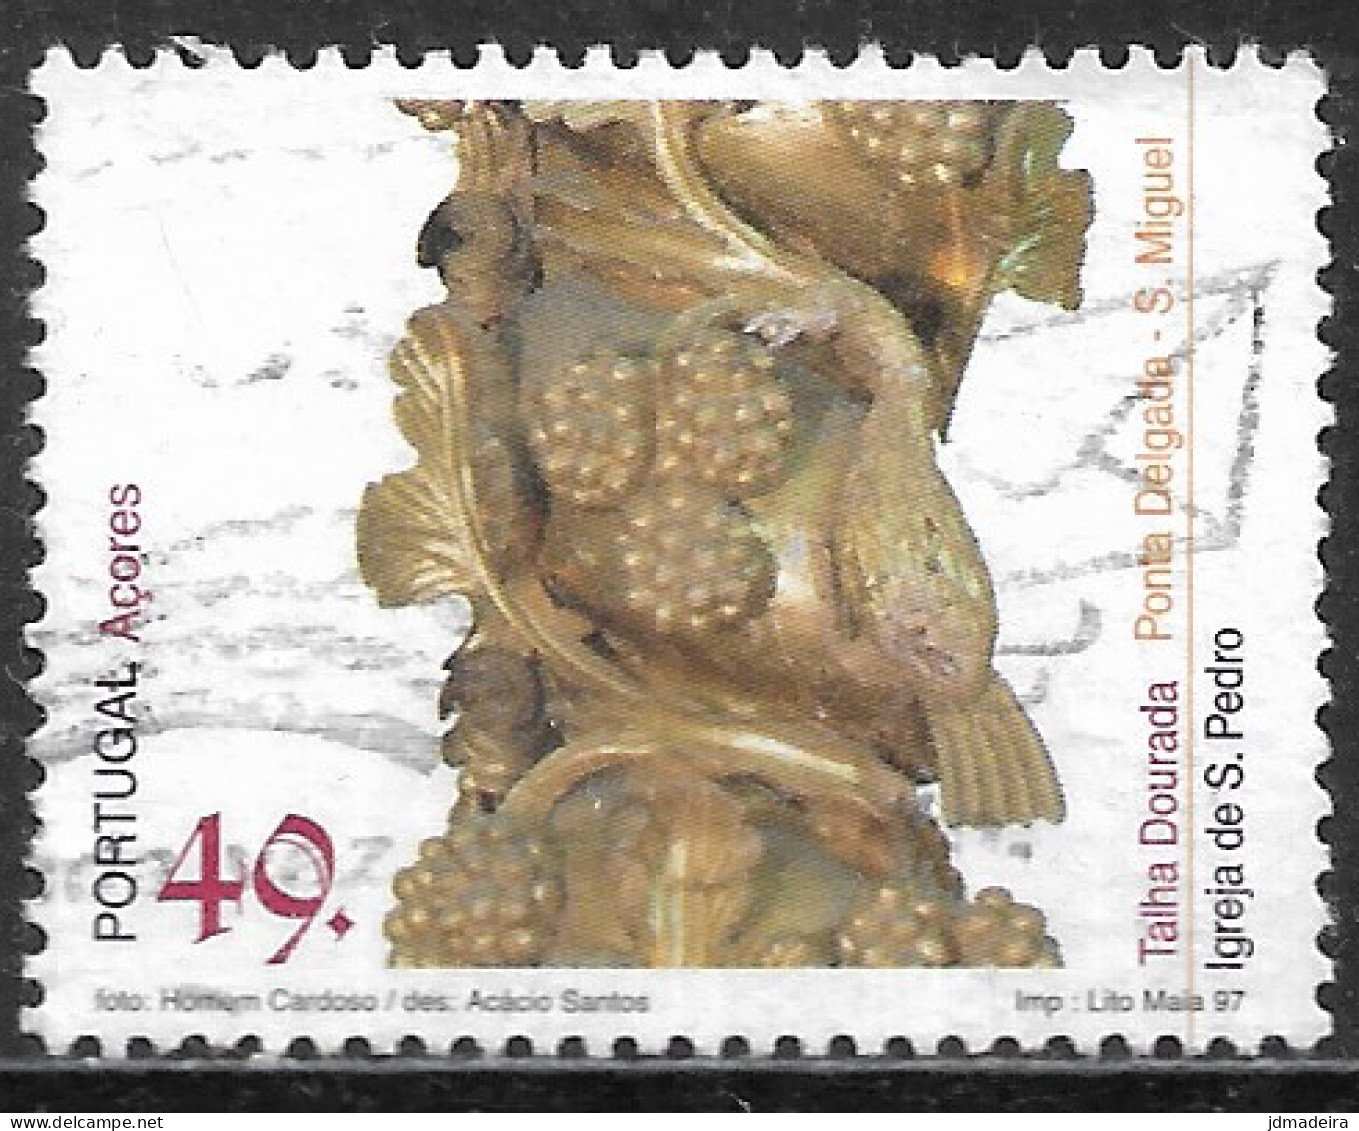 Portugal – 1997 Gold Carving 49. Used Stamp - Usado